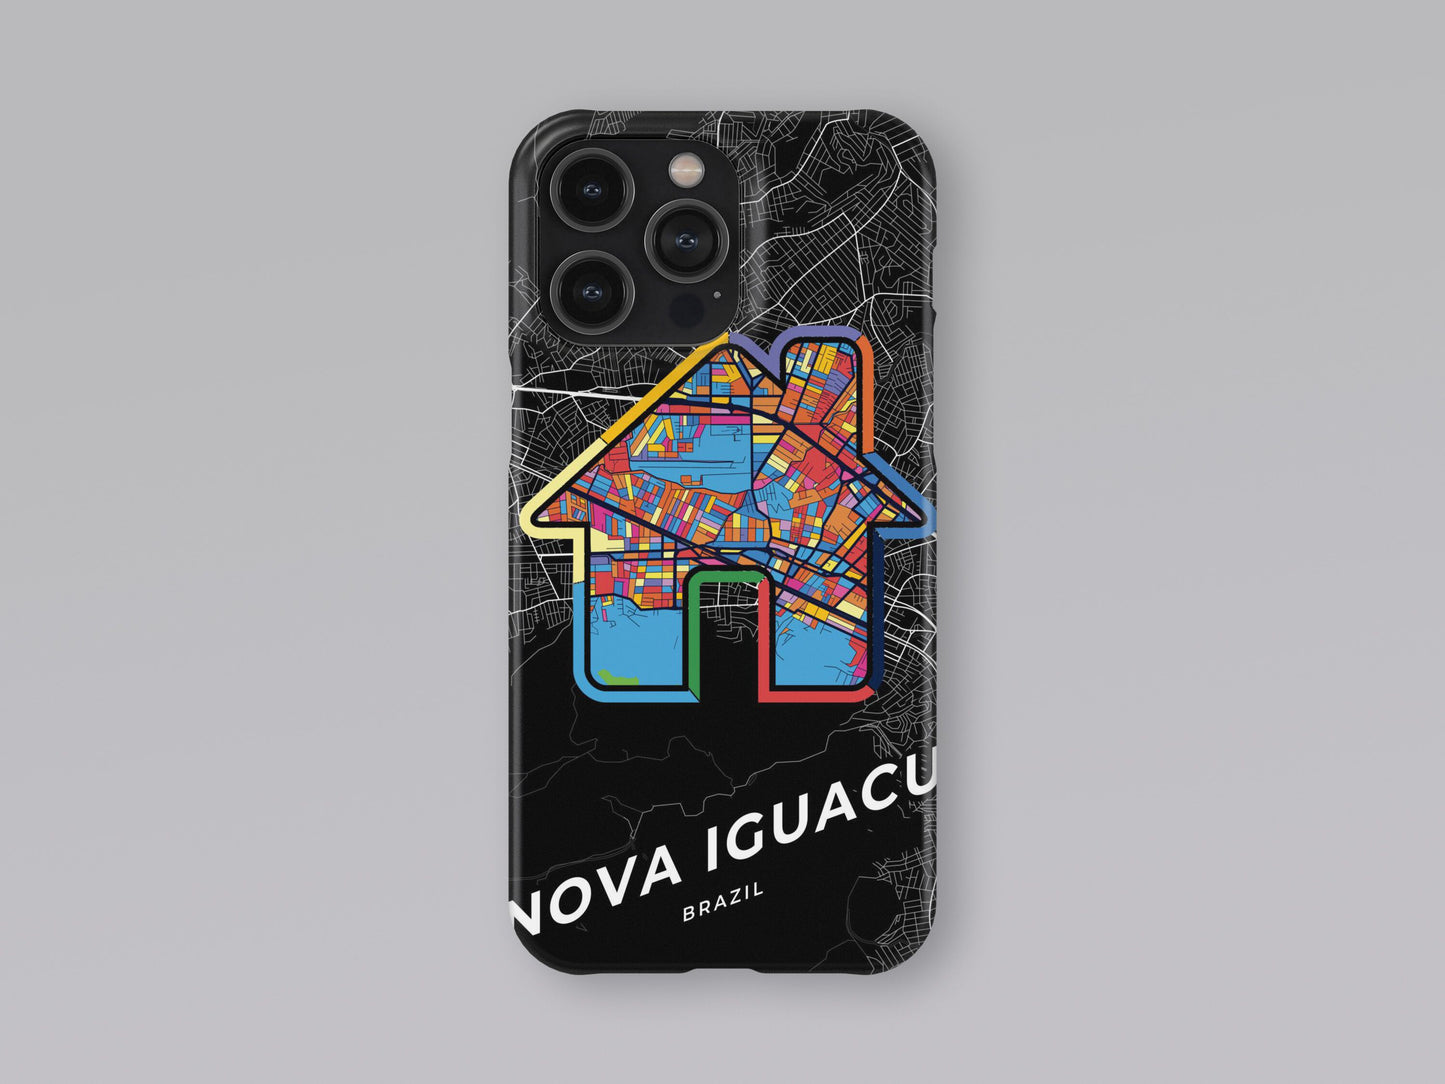 Nova Iguacu Brazil slim phone case with colorful icon 3